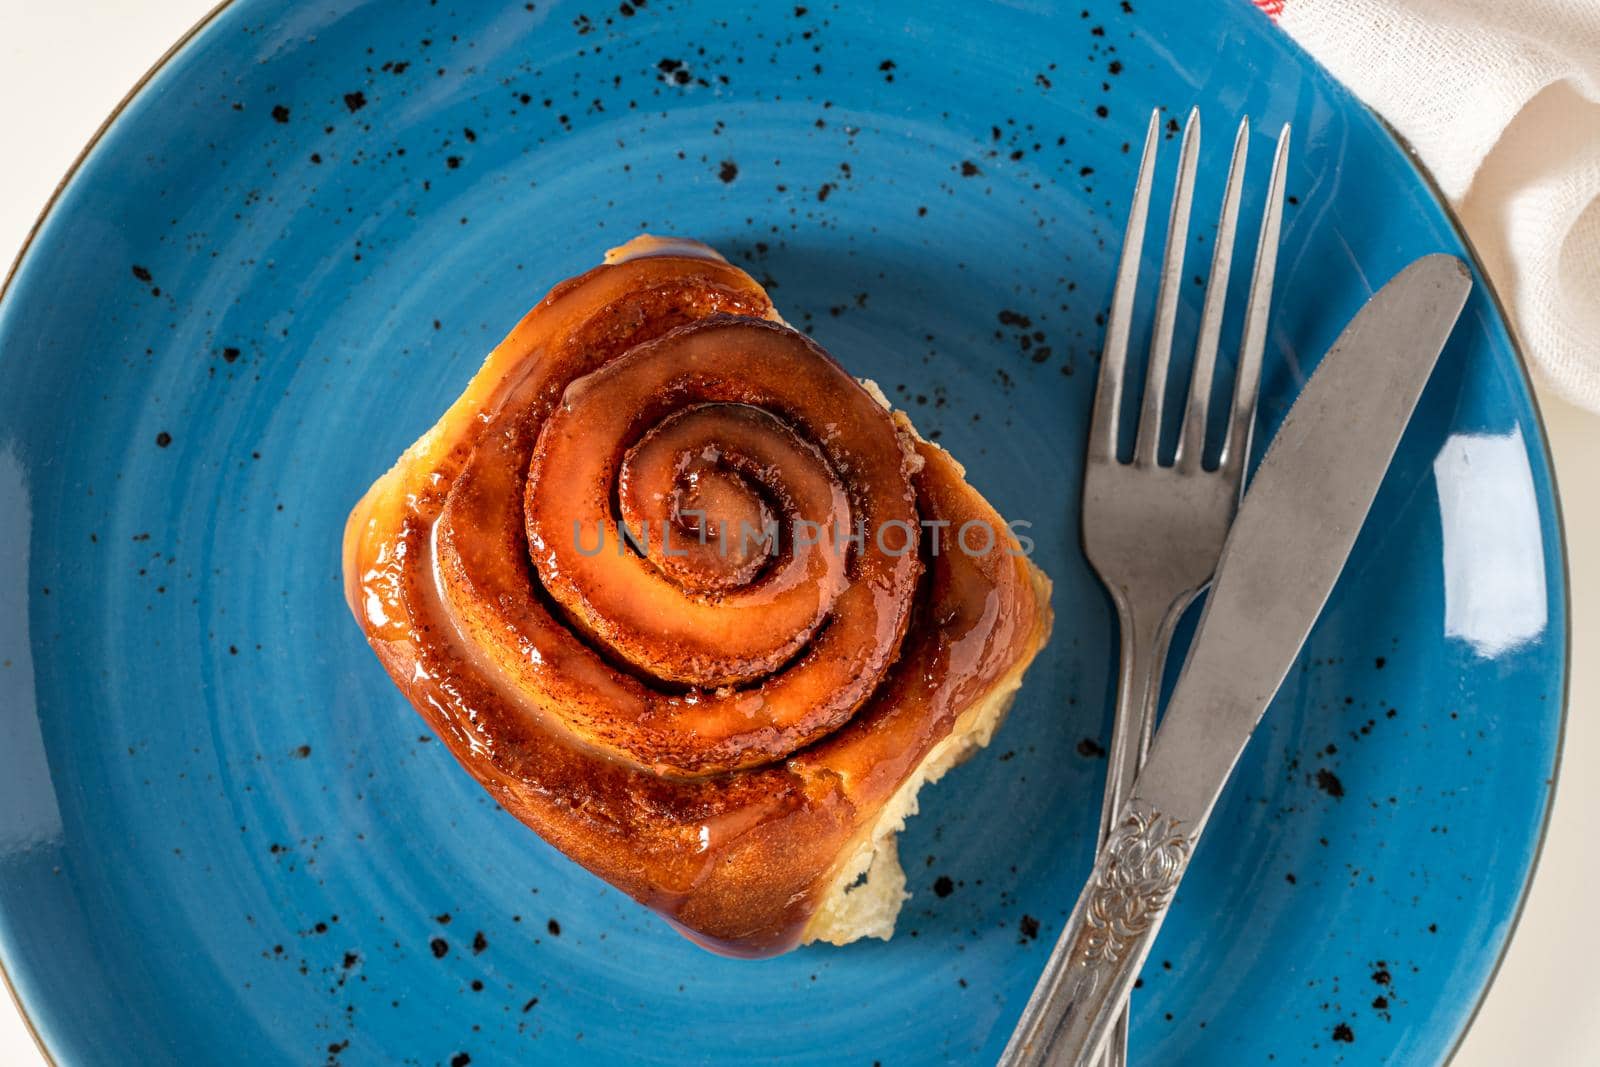 Freshly baked cinnamon roll on a blue porcelain plate